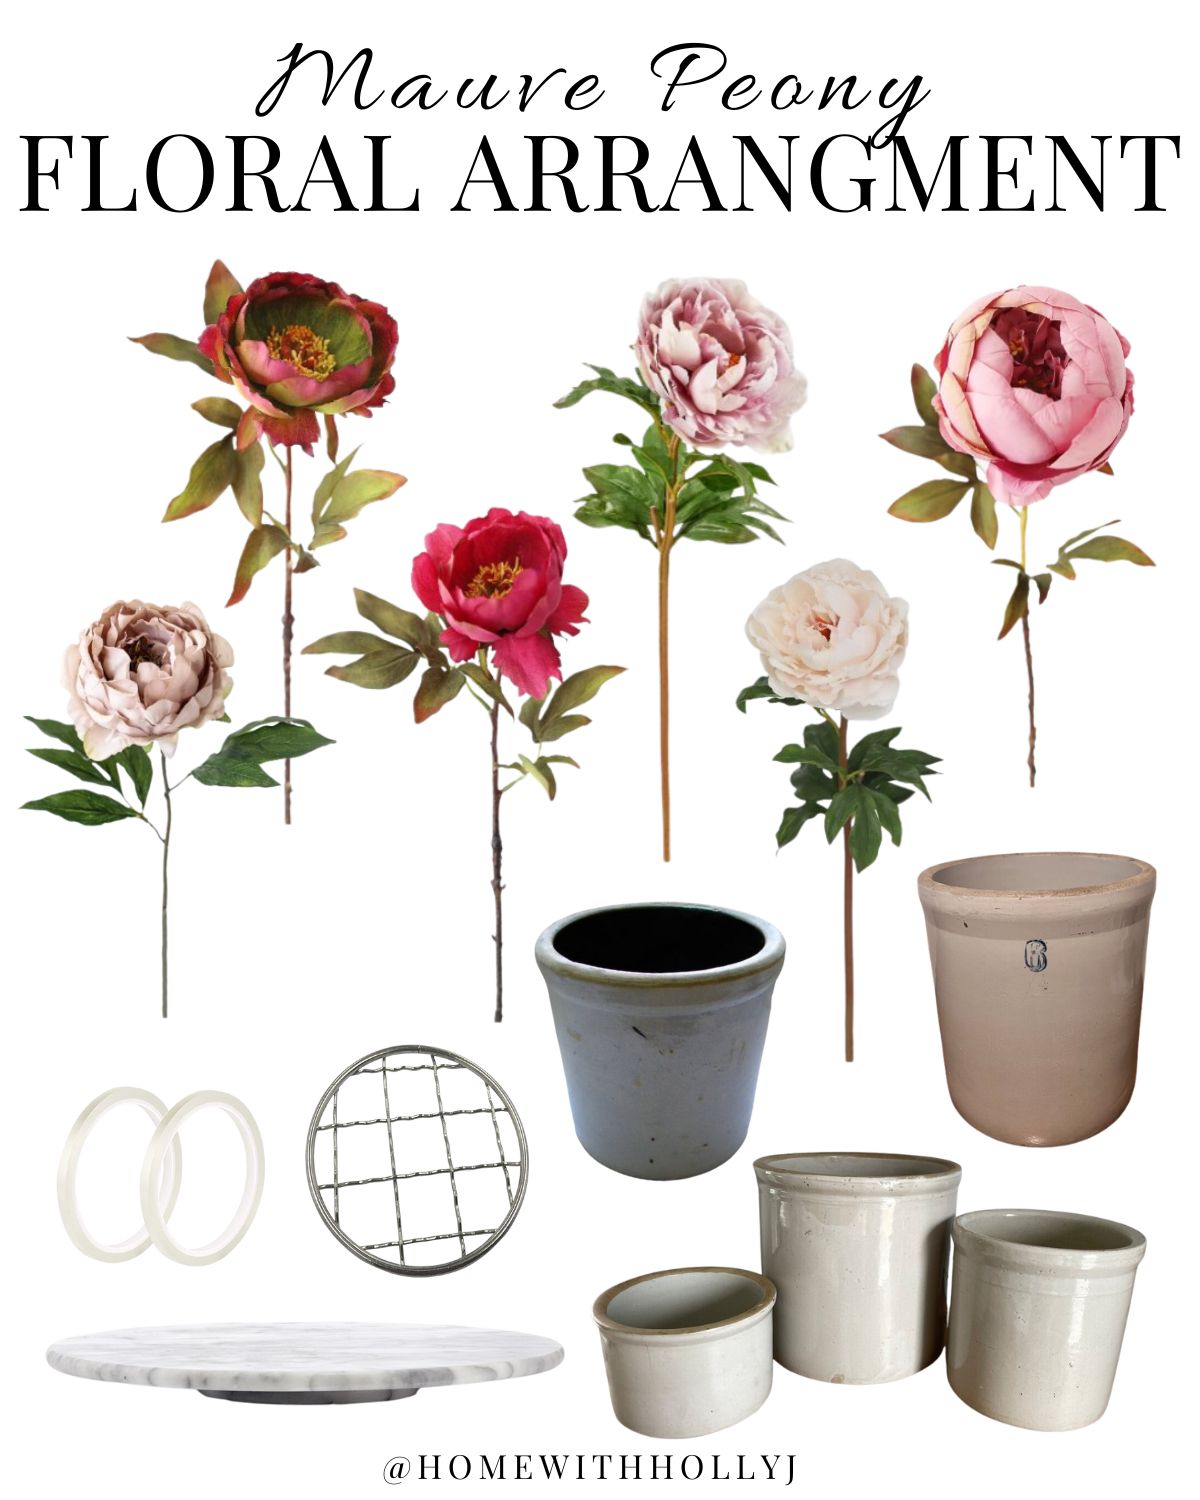 mauve peony flower arrangement mood board collage sources